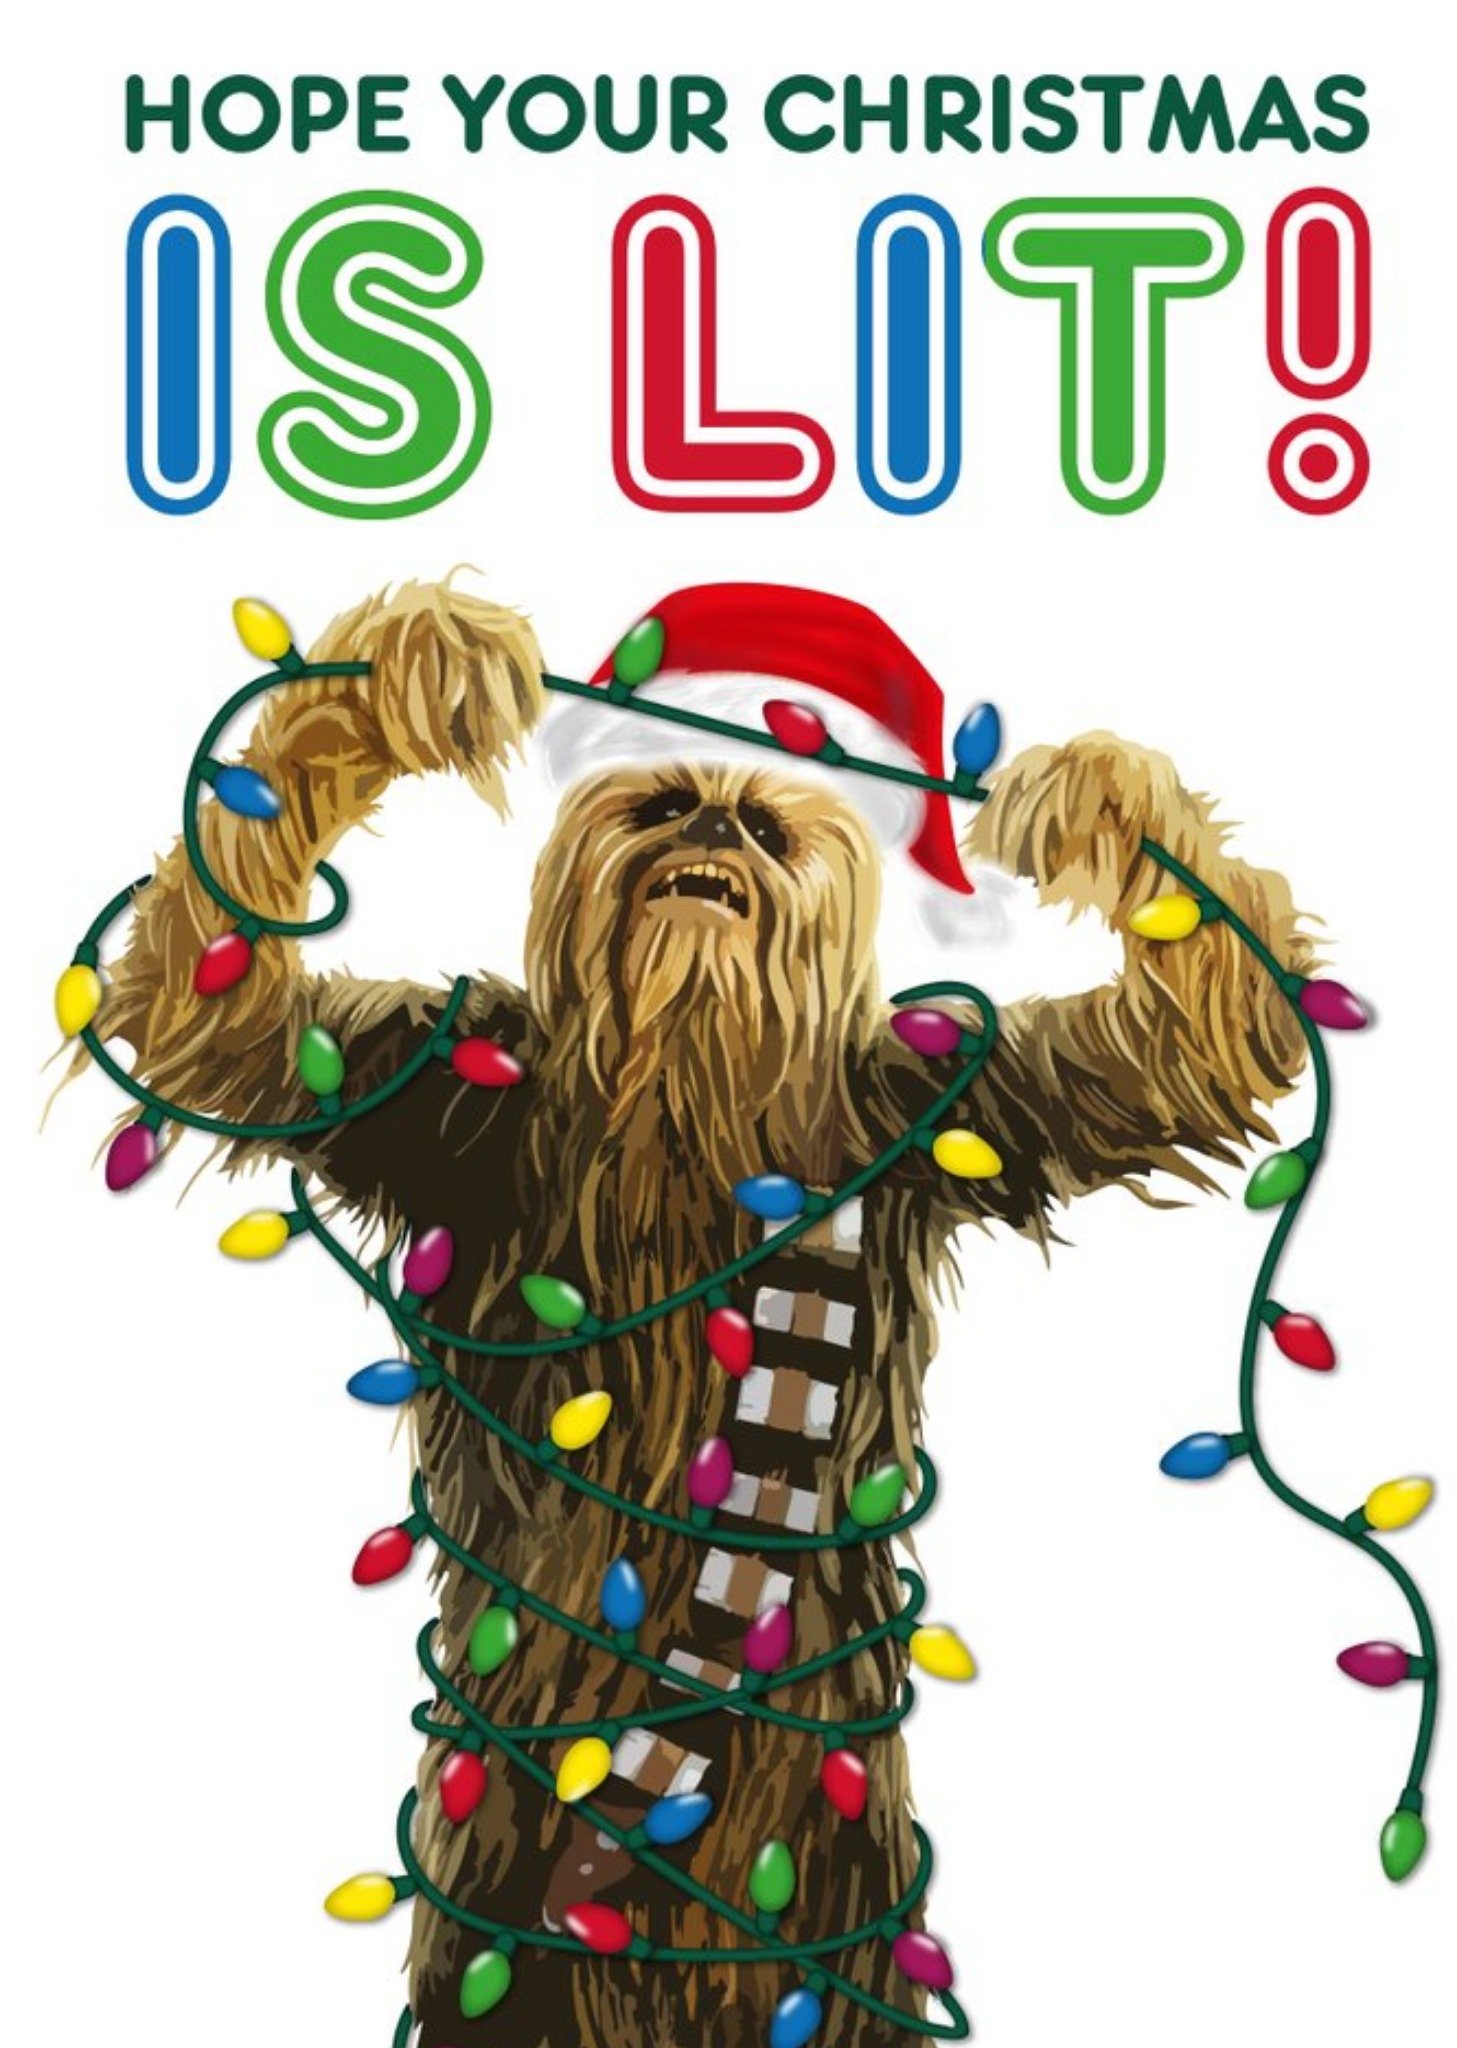 Disney Star Wars Hope Your Christmas Is Lit Card Ecard